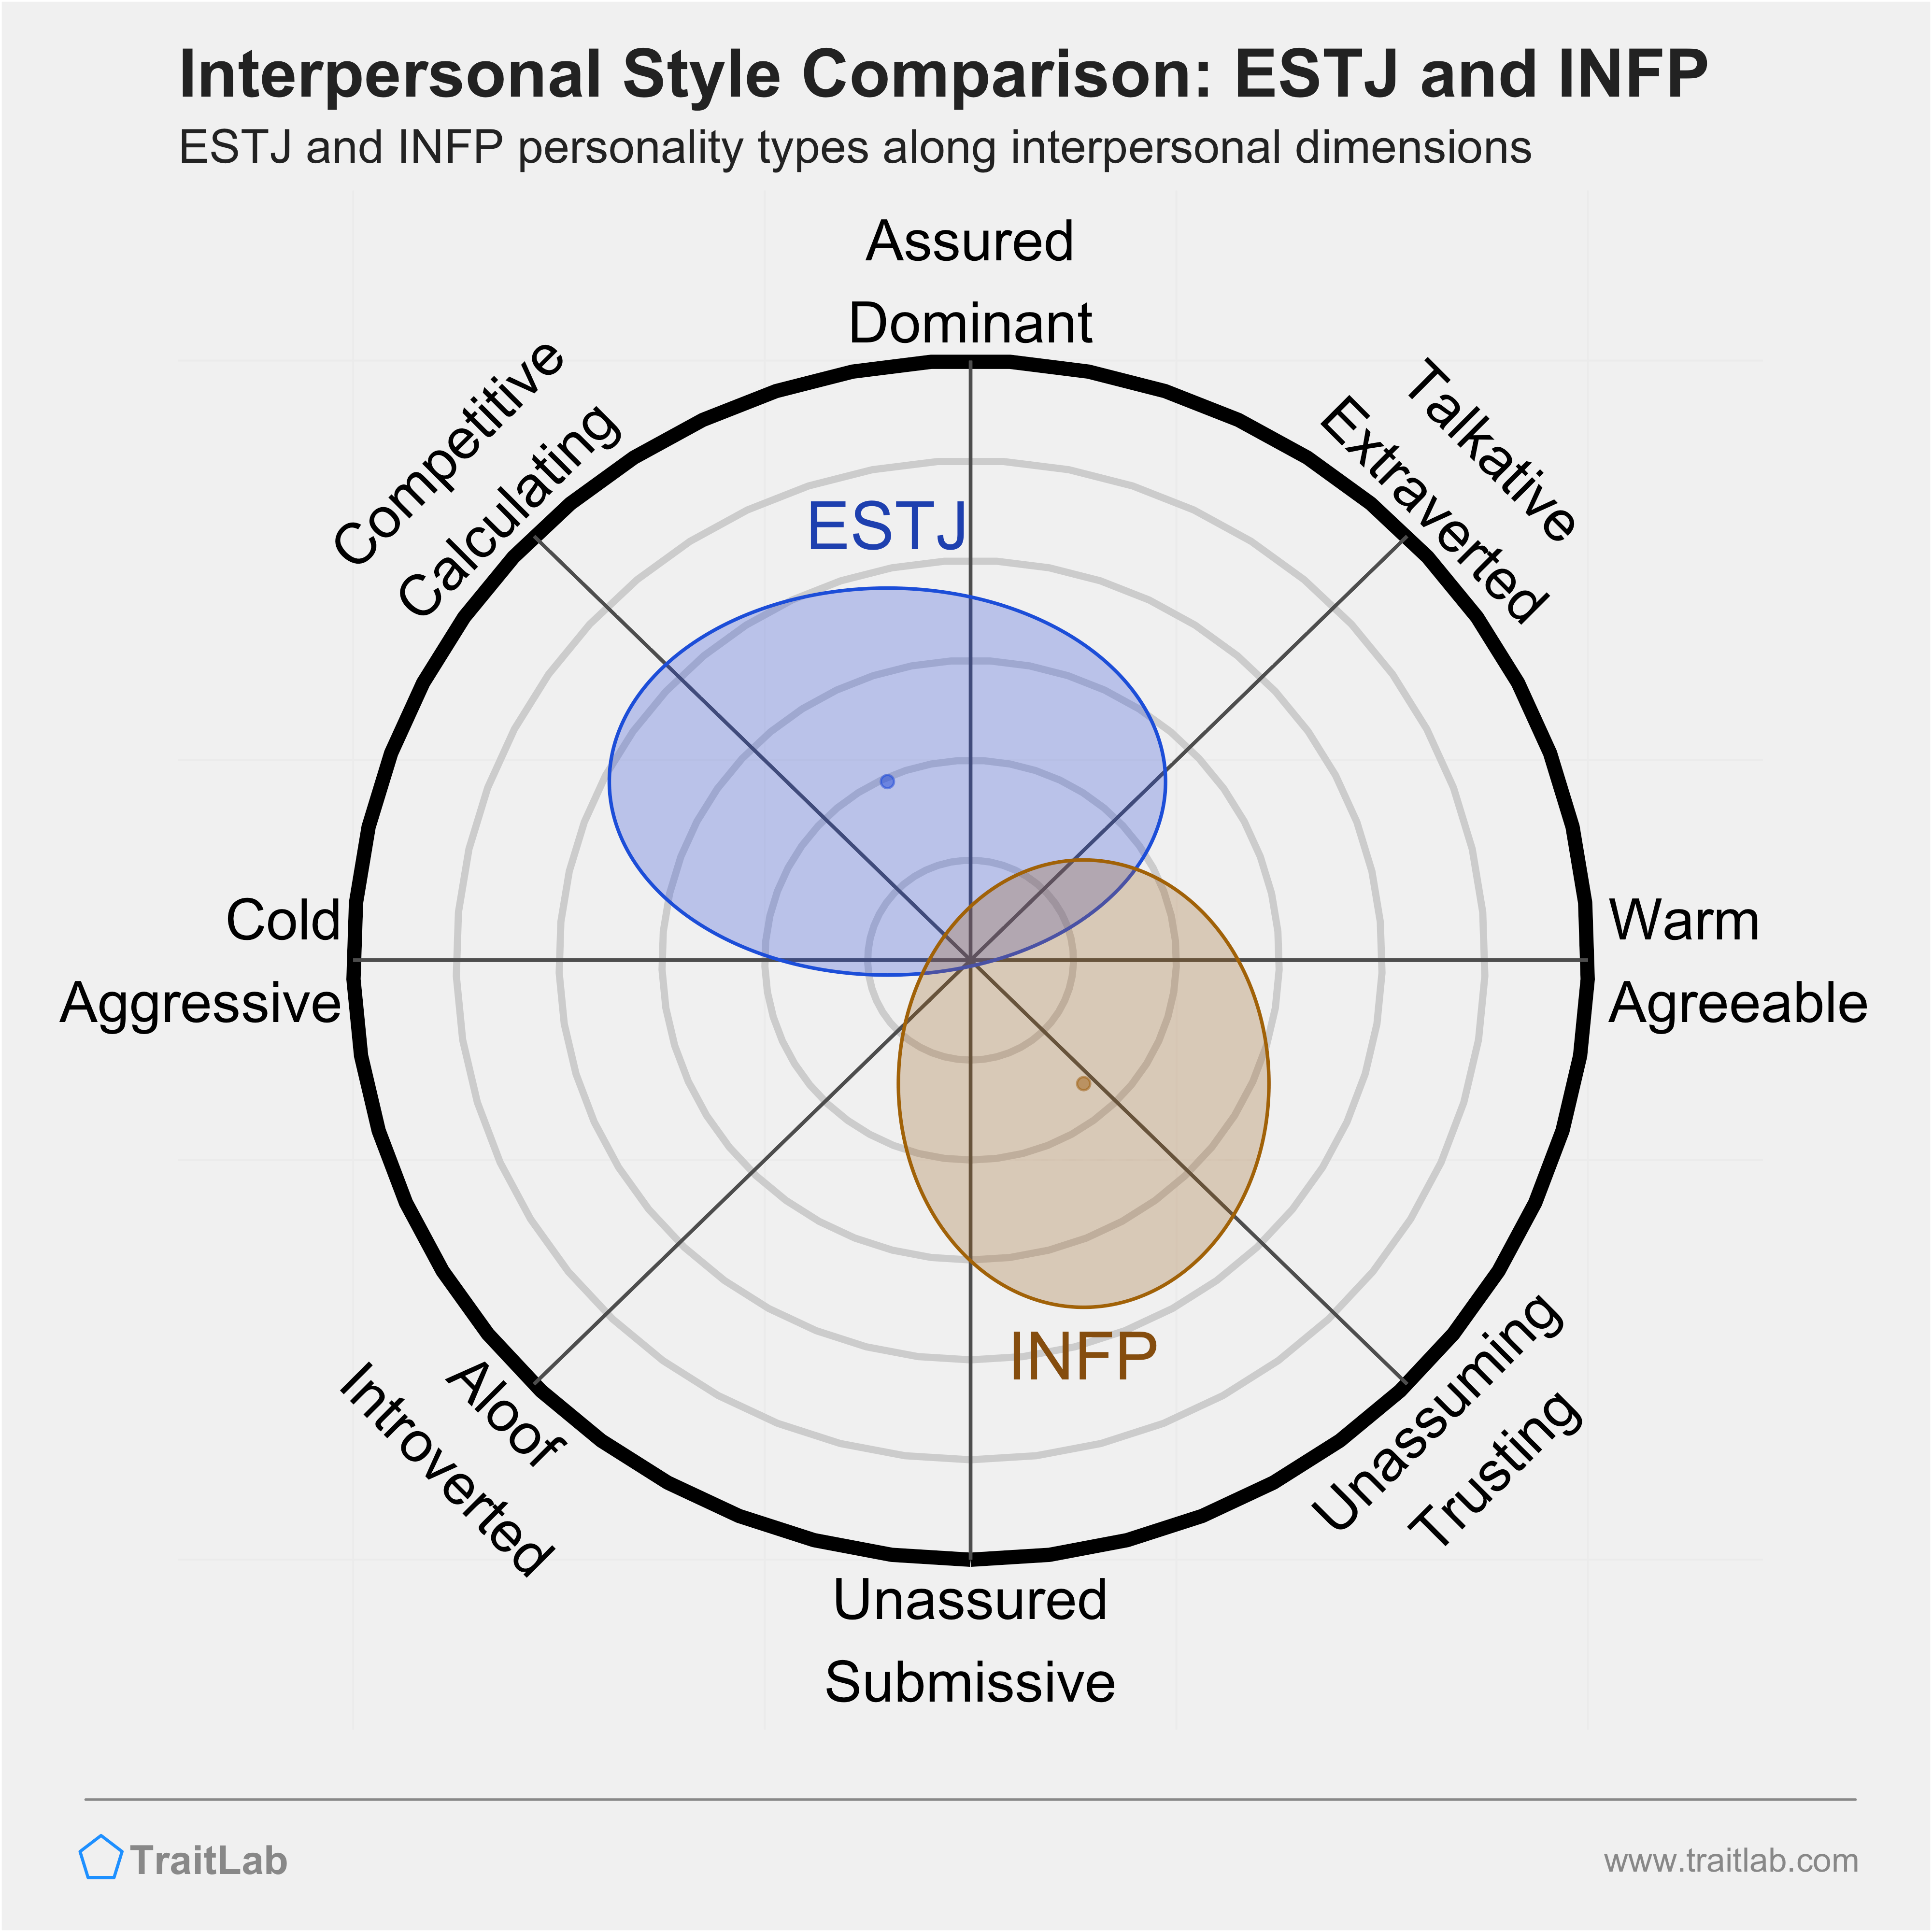 ESTJ and INFP comparison across interpersonal dimensions